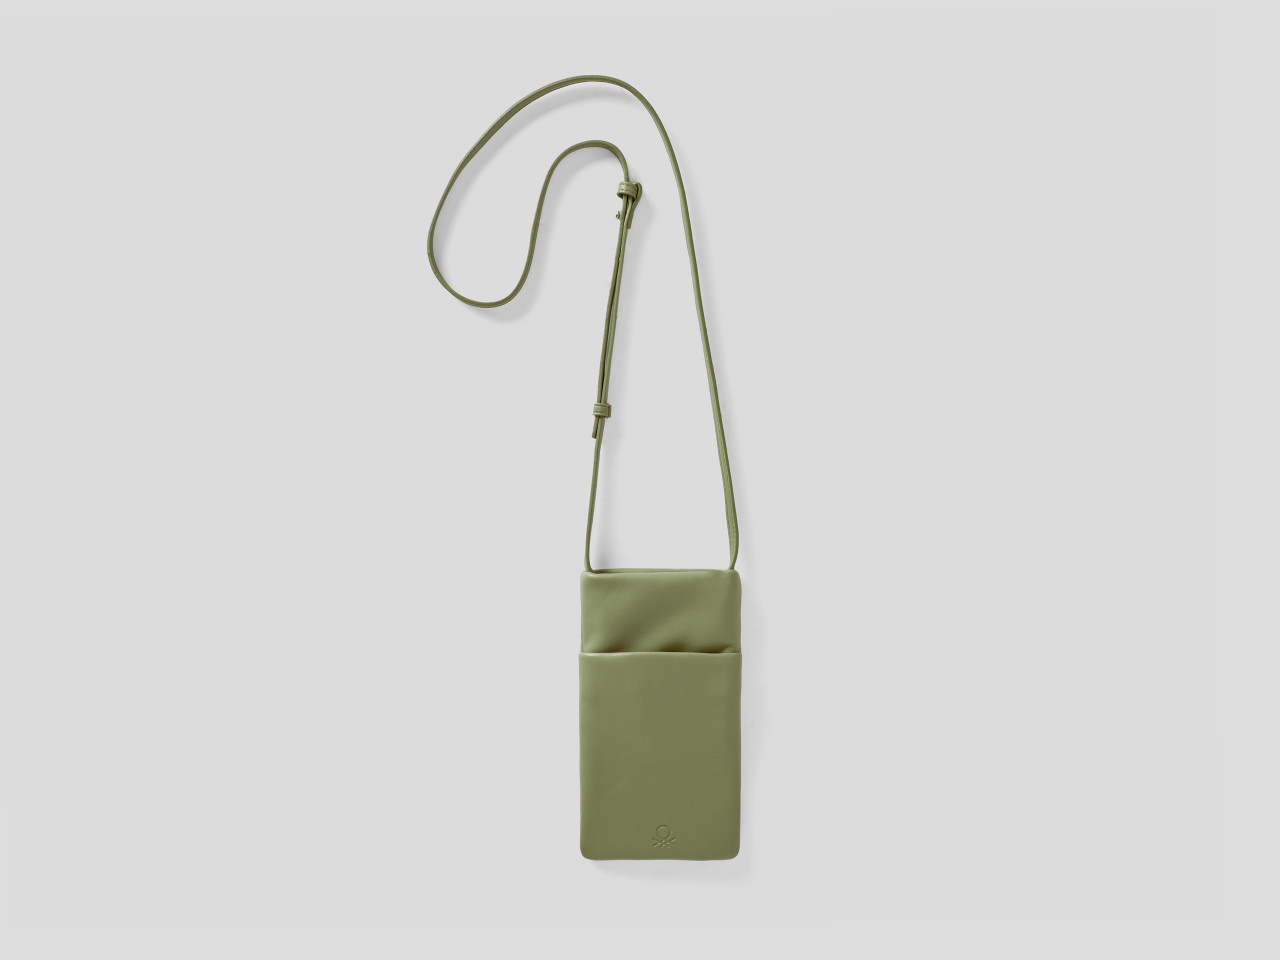 Buy United Colors of Benetton Women's Handbag Bag (Brown) at Amazon.in